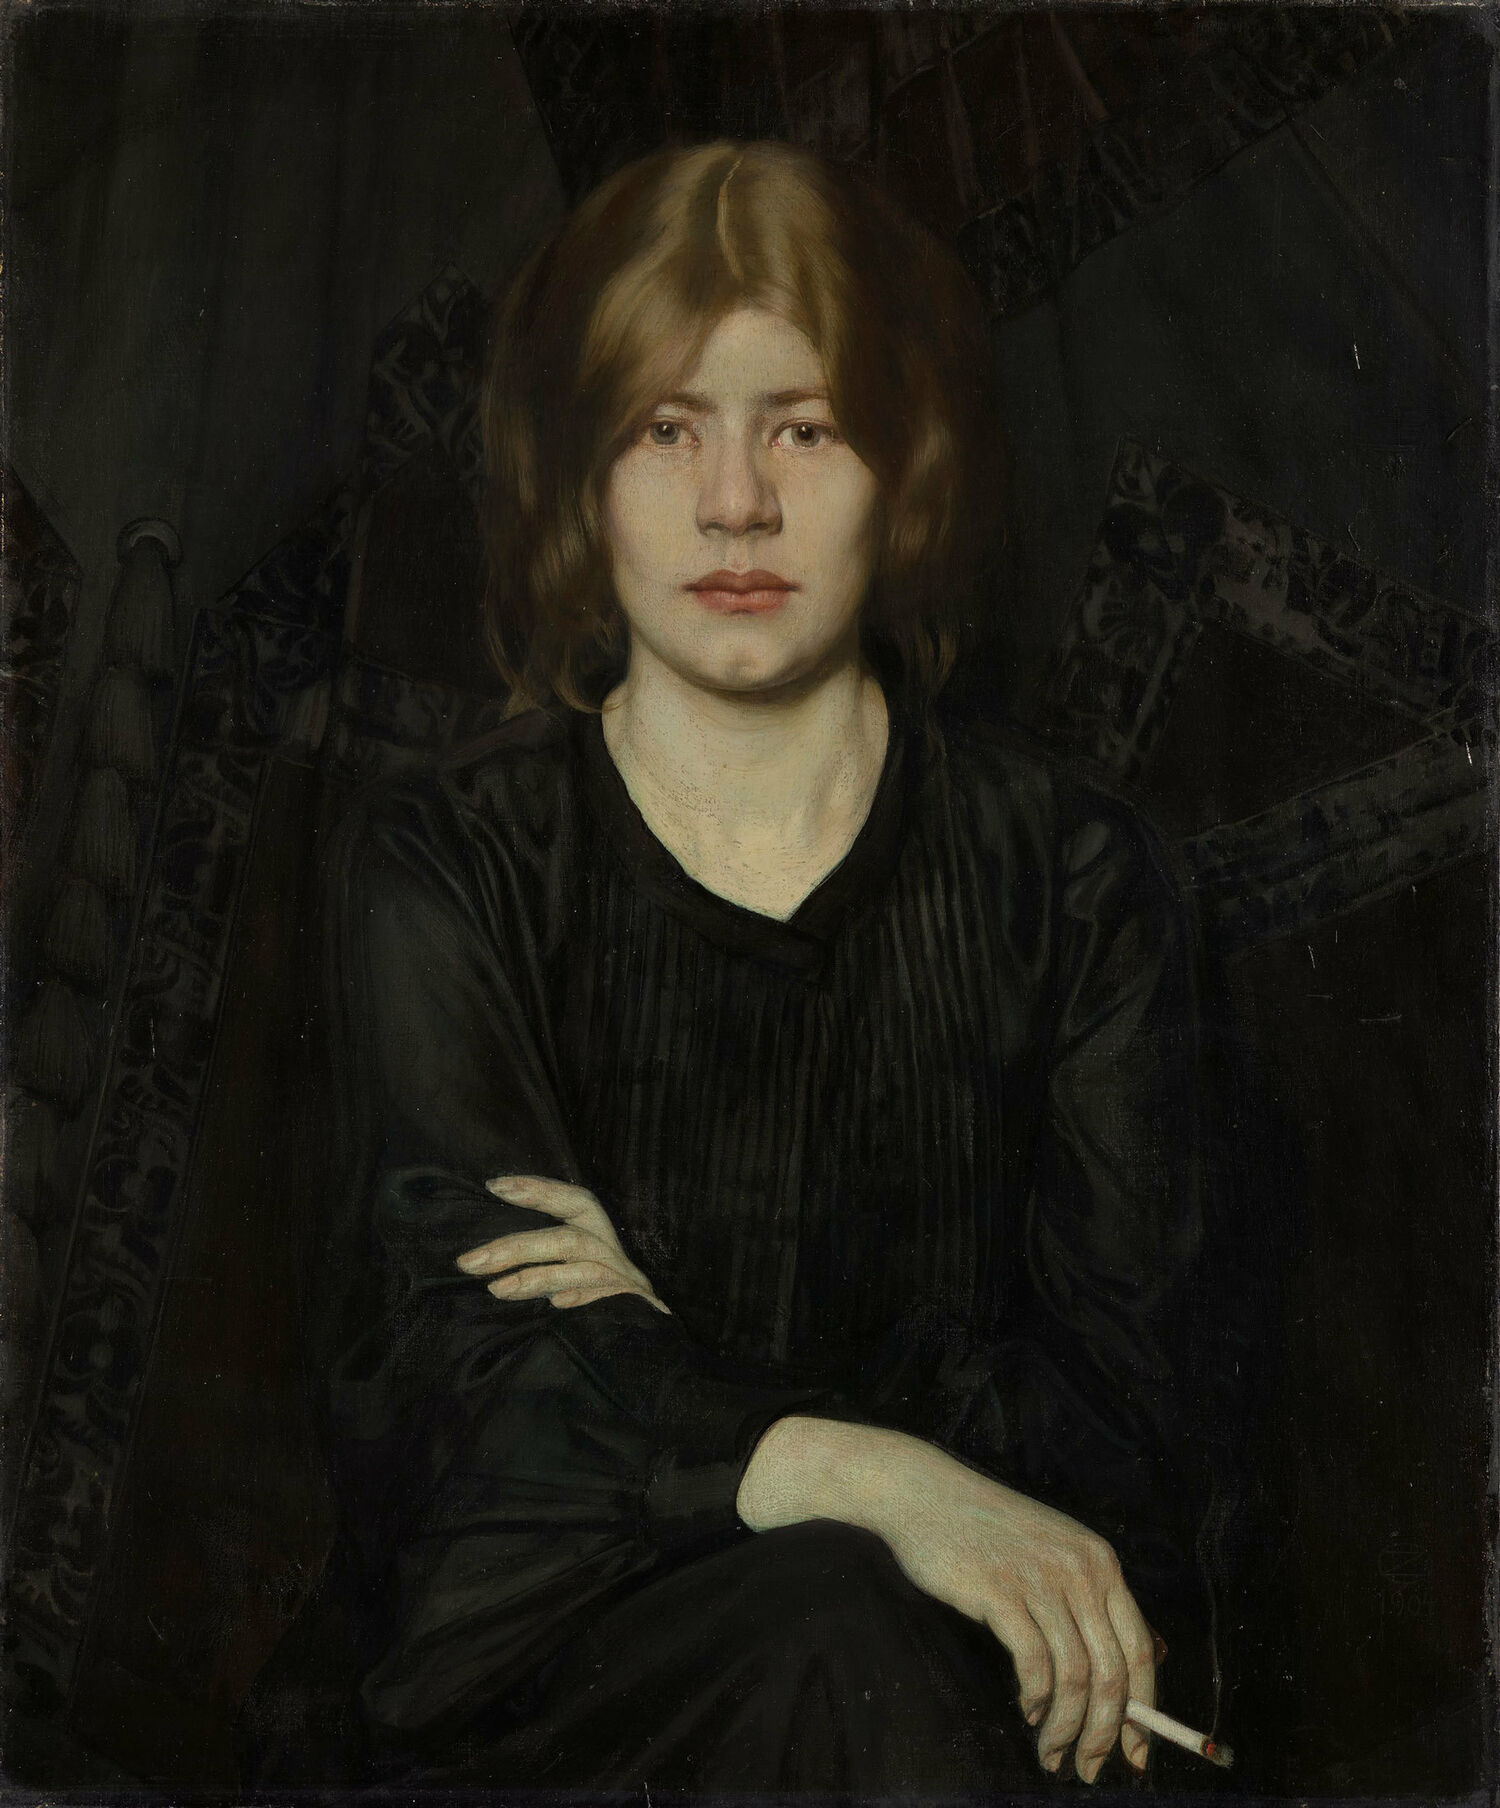 Oskar Zwintscher, Portrait of a Lady with a Cigarette, 1904, Albertinum © Albertinum, Galerie Neue Meister, Staatliche Kunstsammlungen Dresden